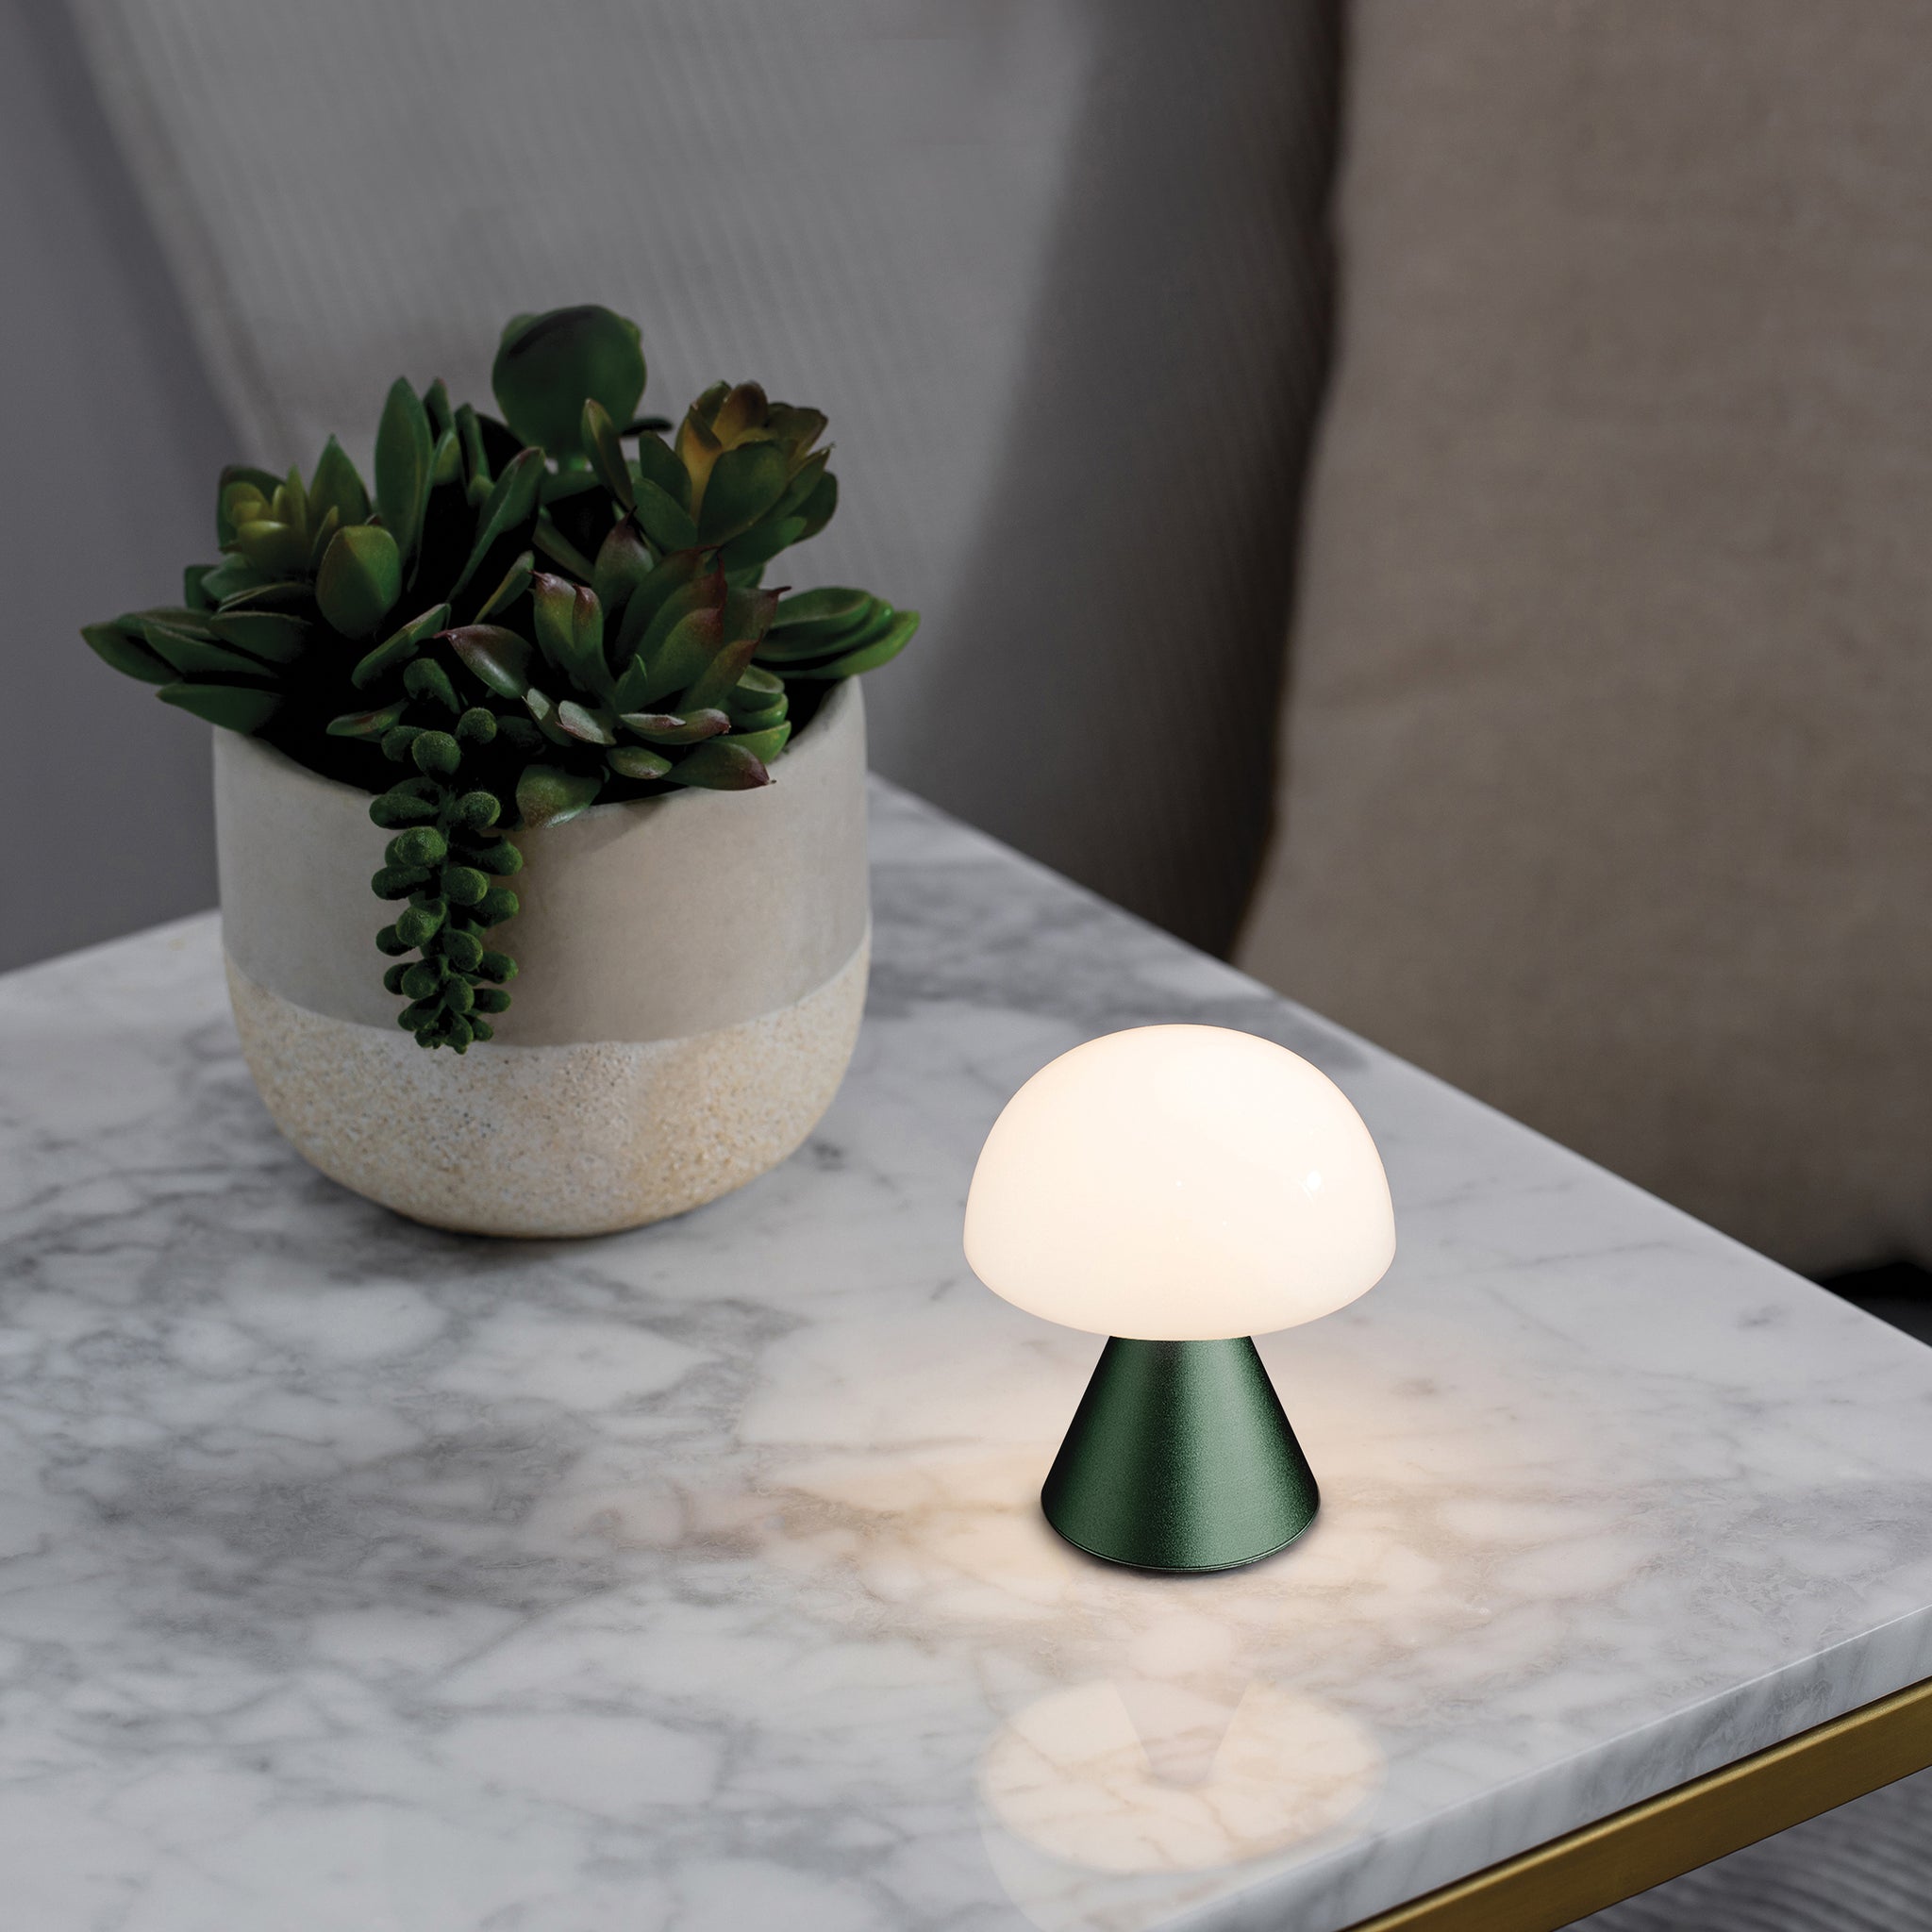 Lexon Mina Small Oplaadbare LED-Lamp Donkergroen│art. LH60DG1│op tafeltje naast plant met licht aan